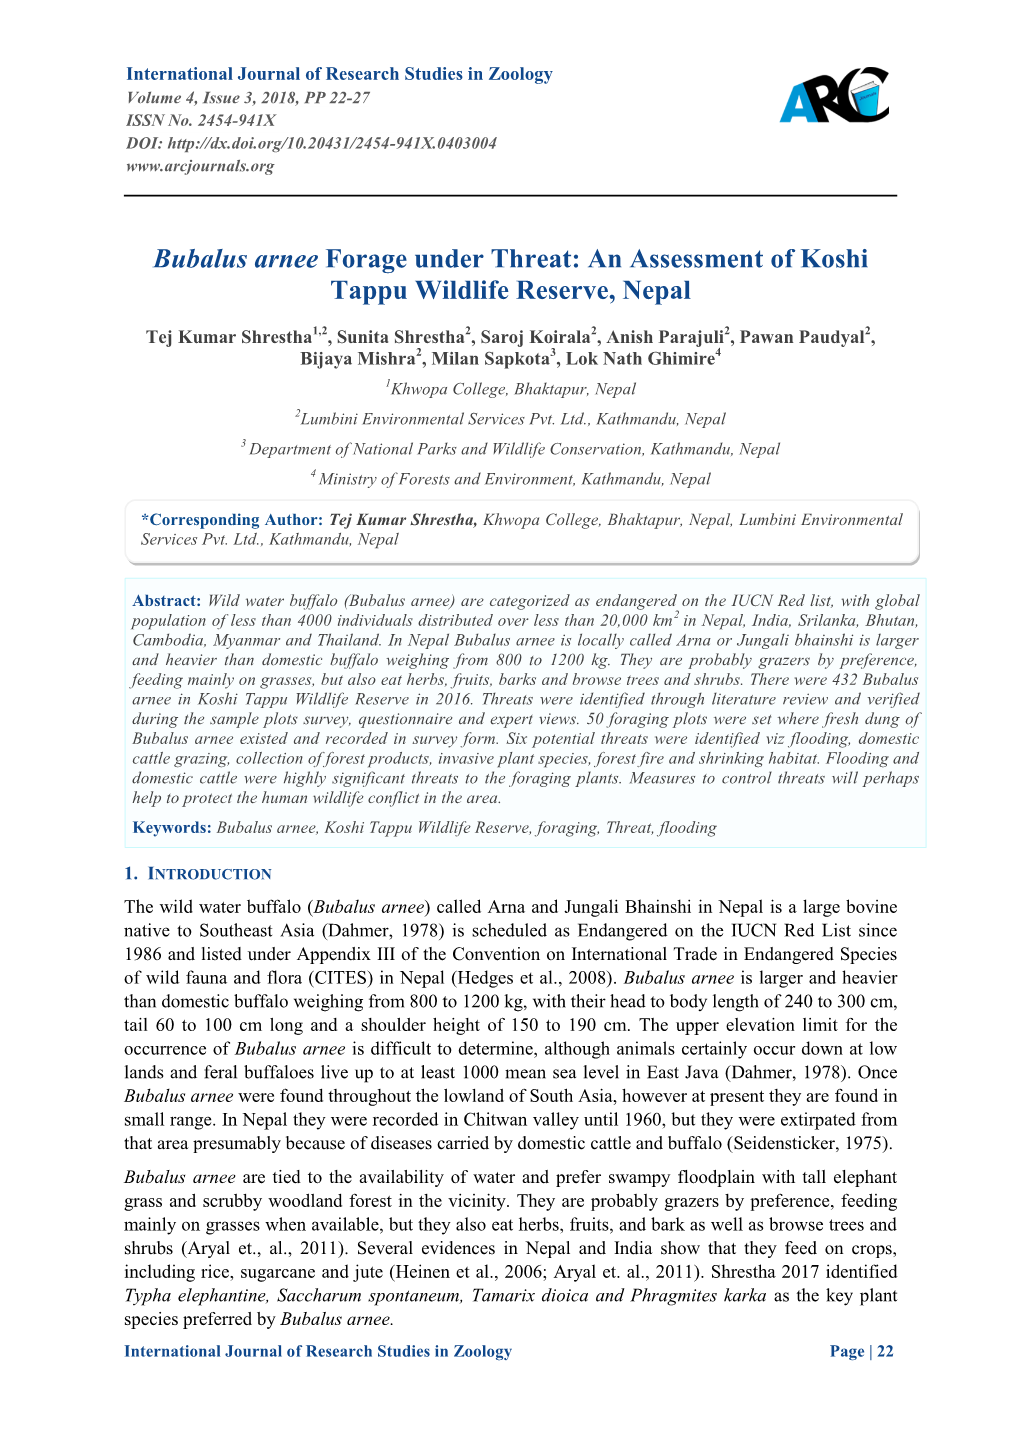 Bubalus Arnee Forage Under Threat: an Assessment of Koshi Tappu Wildlife Reserve, Nepal